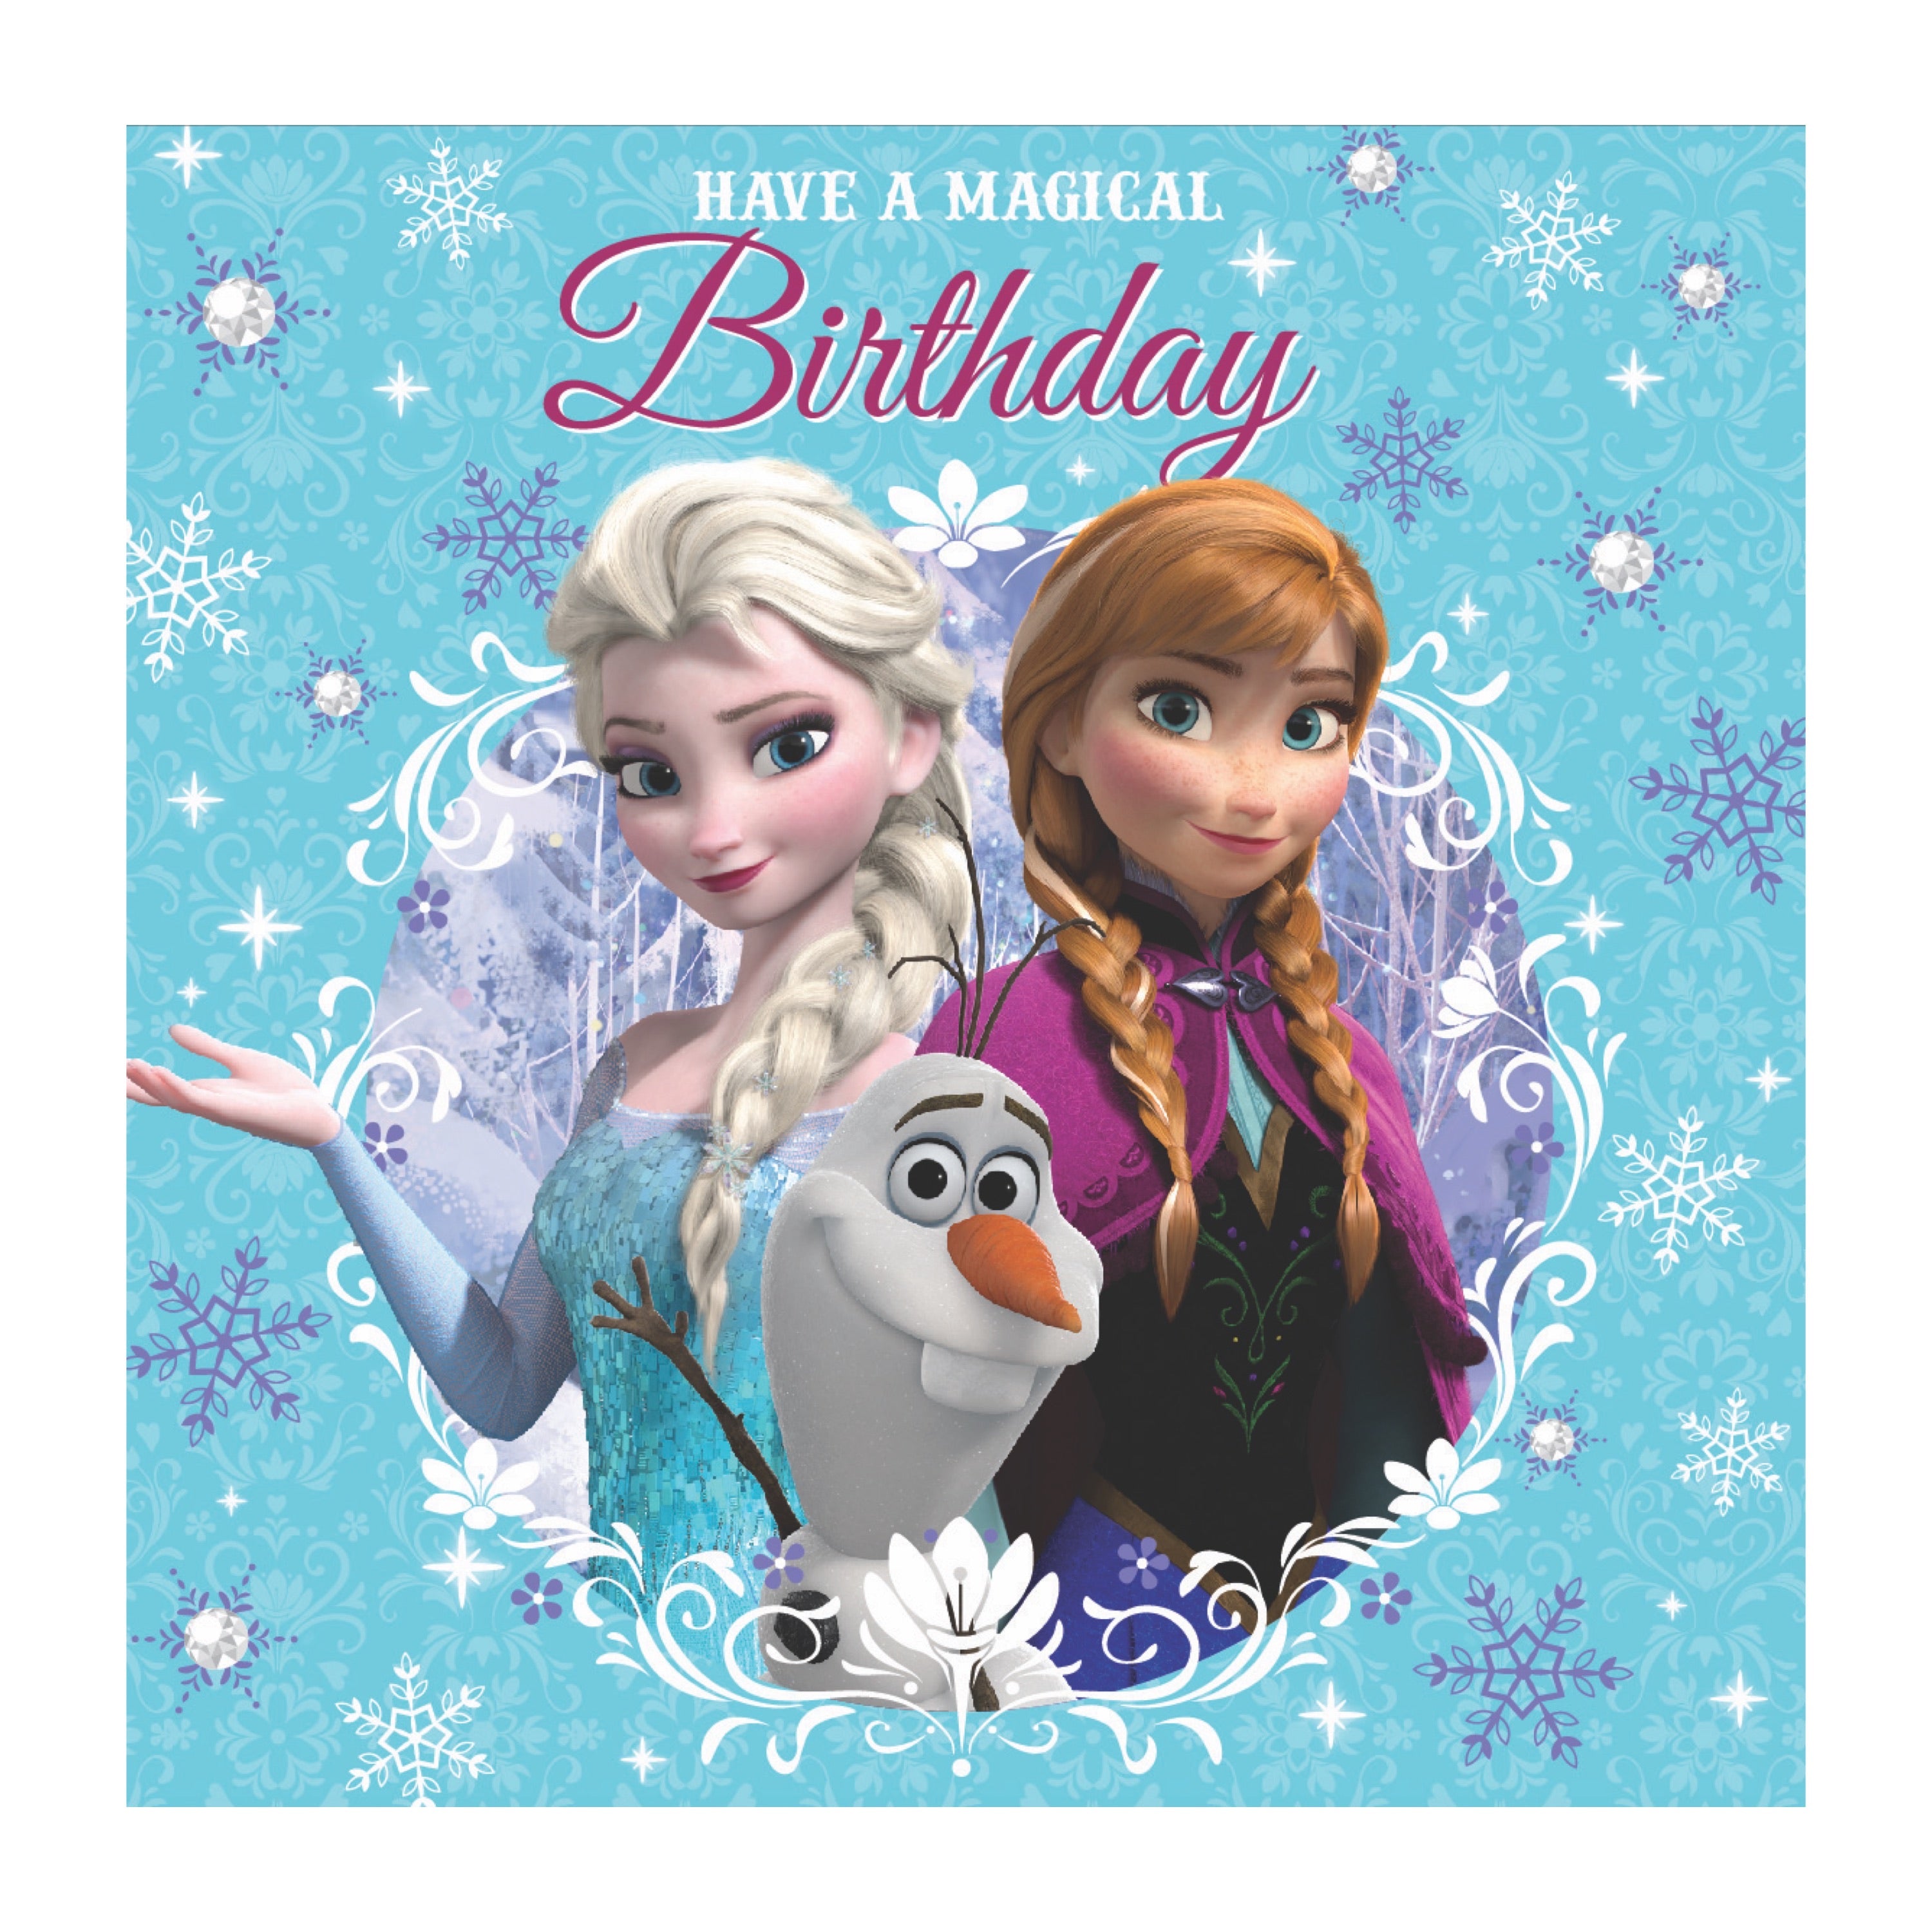 Frozen Birthday Card Printable